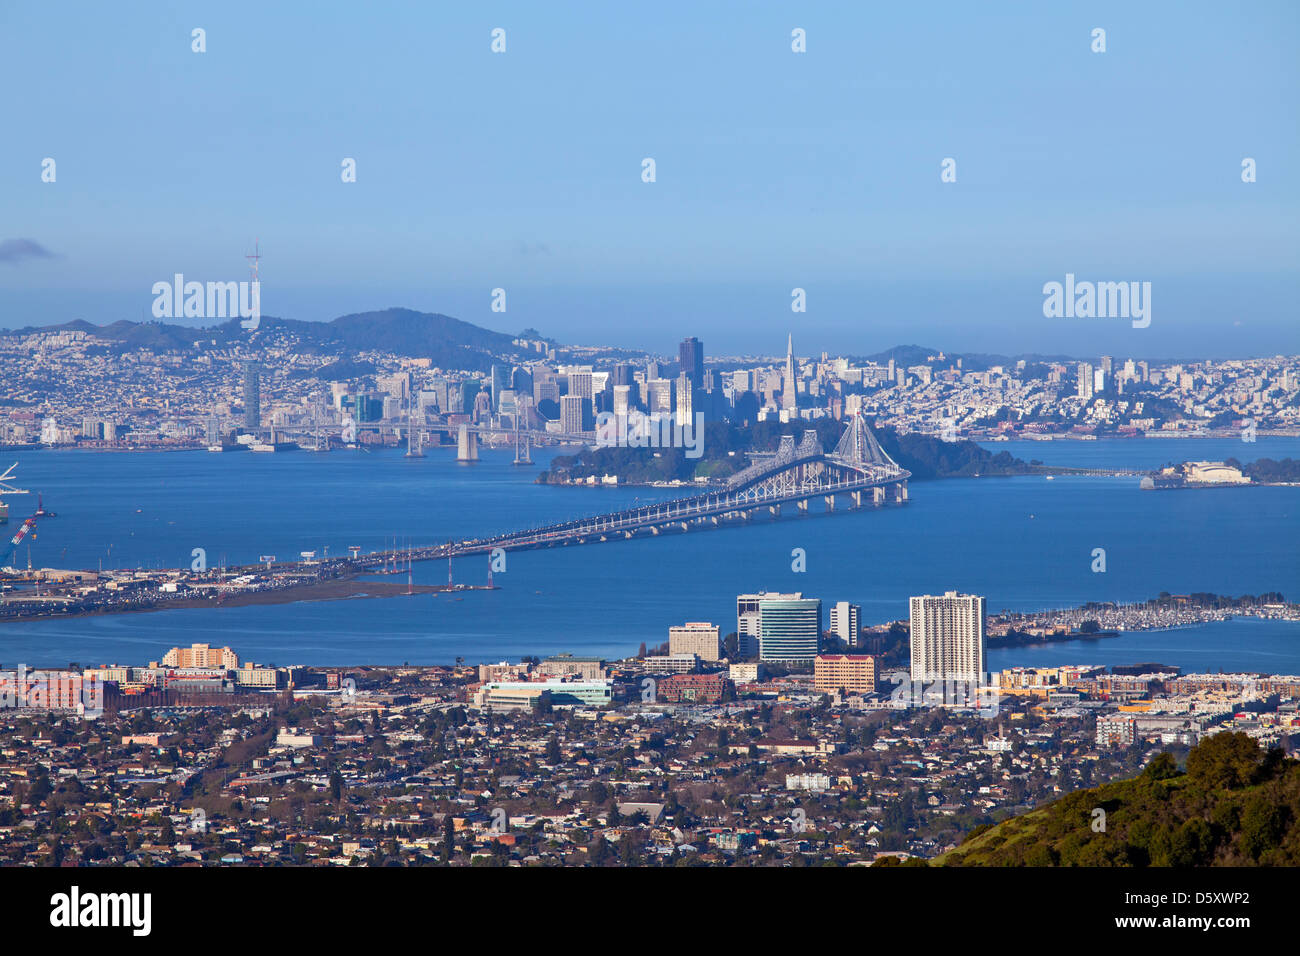 San Francisco-Oakland Bay Bridge lo skyline di San Francisco, California Foto Stock